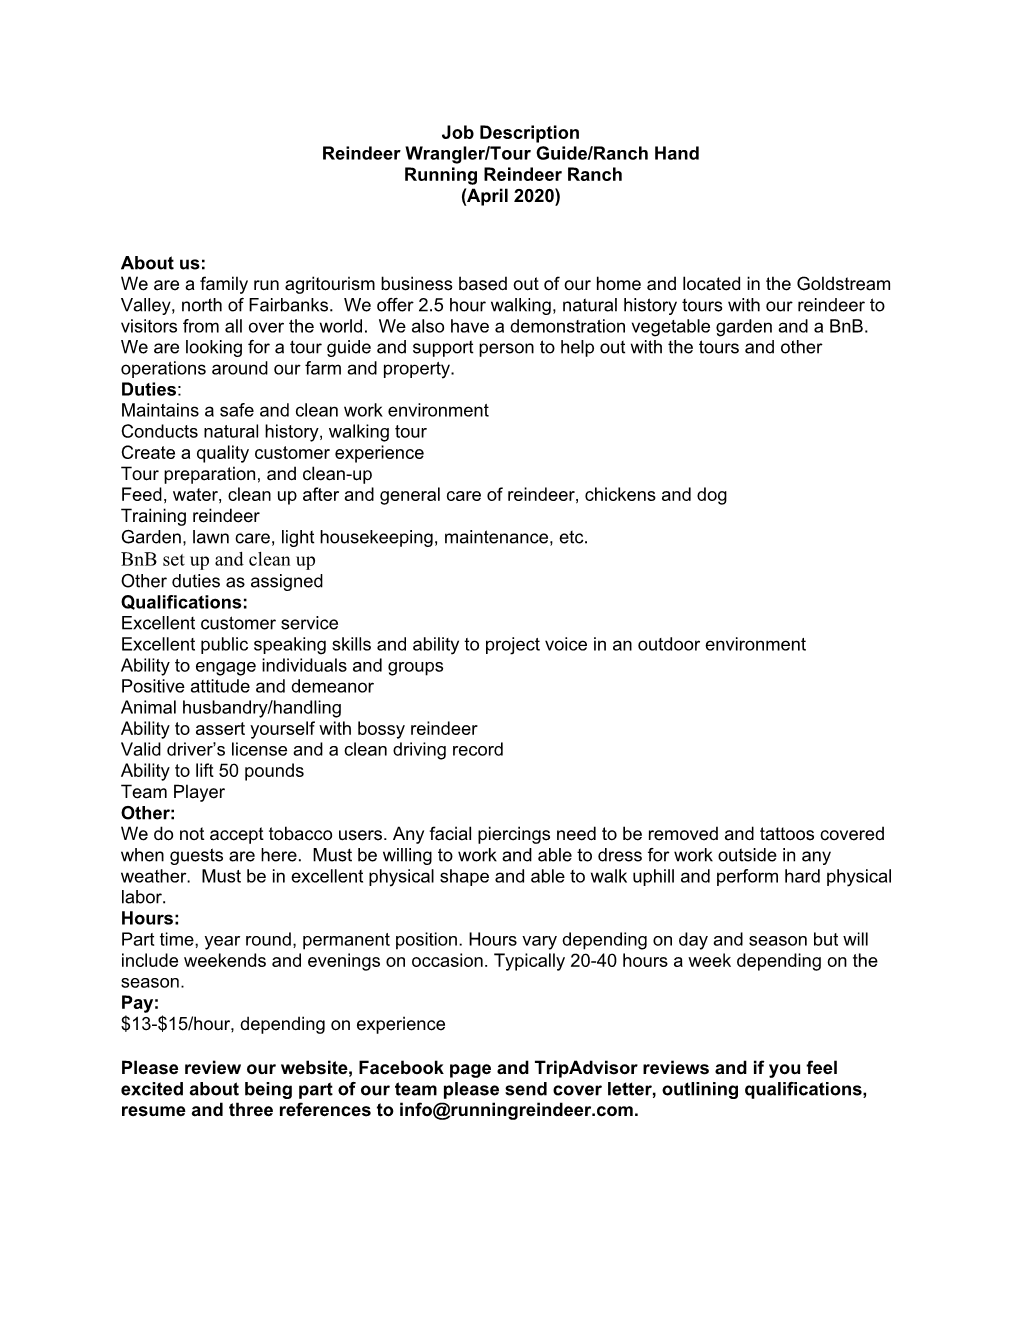 Job Description for Reindeer Wrangler at Running Reindeer Ranch